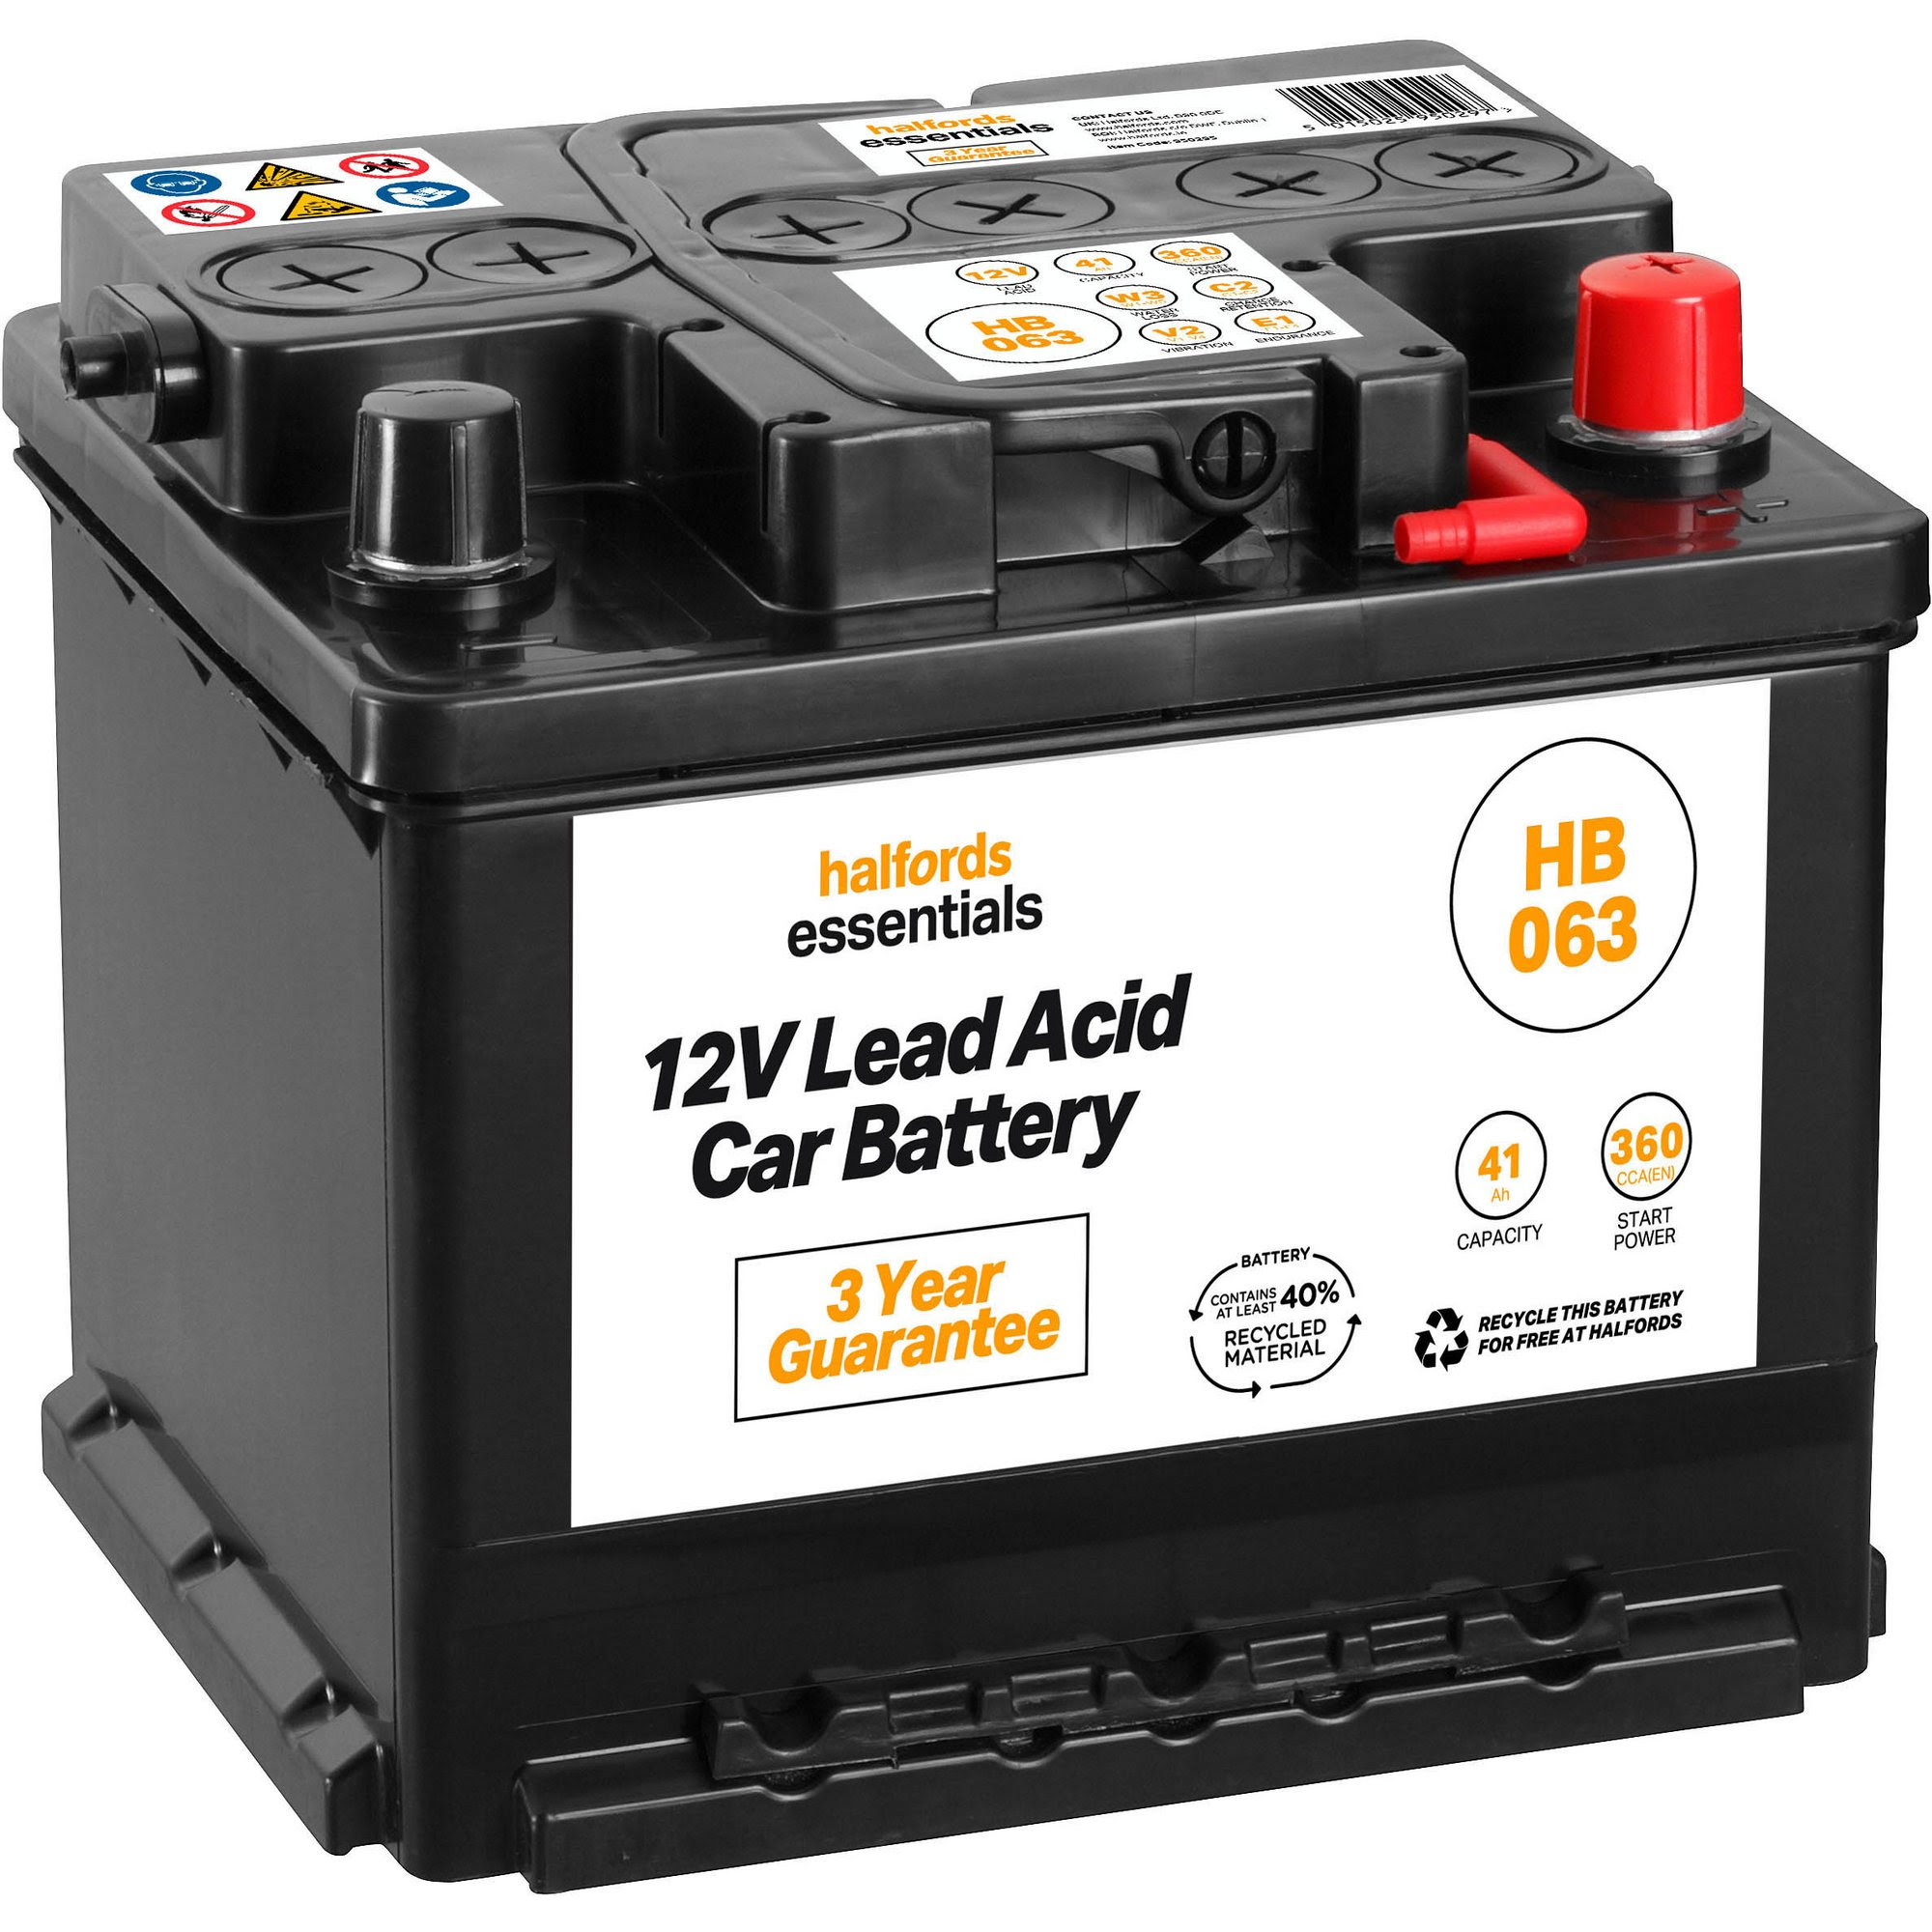 Fiesta Battery Price ~ Ford Ka Car Battery ~ Powerline 063 Car Battery ...